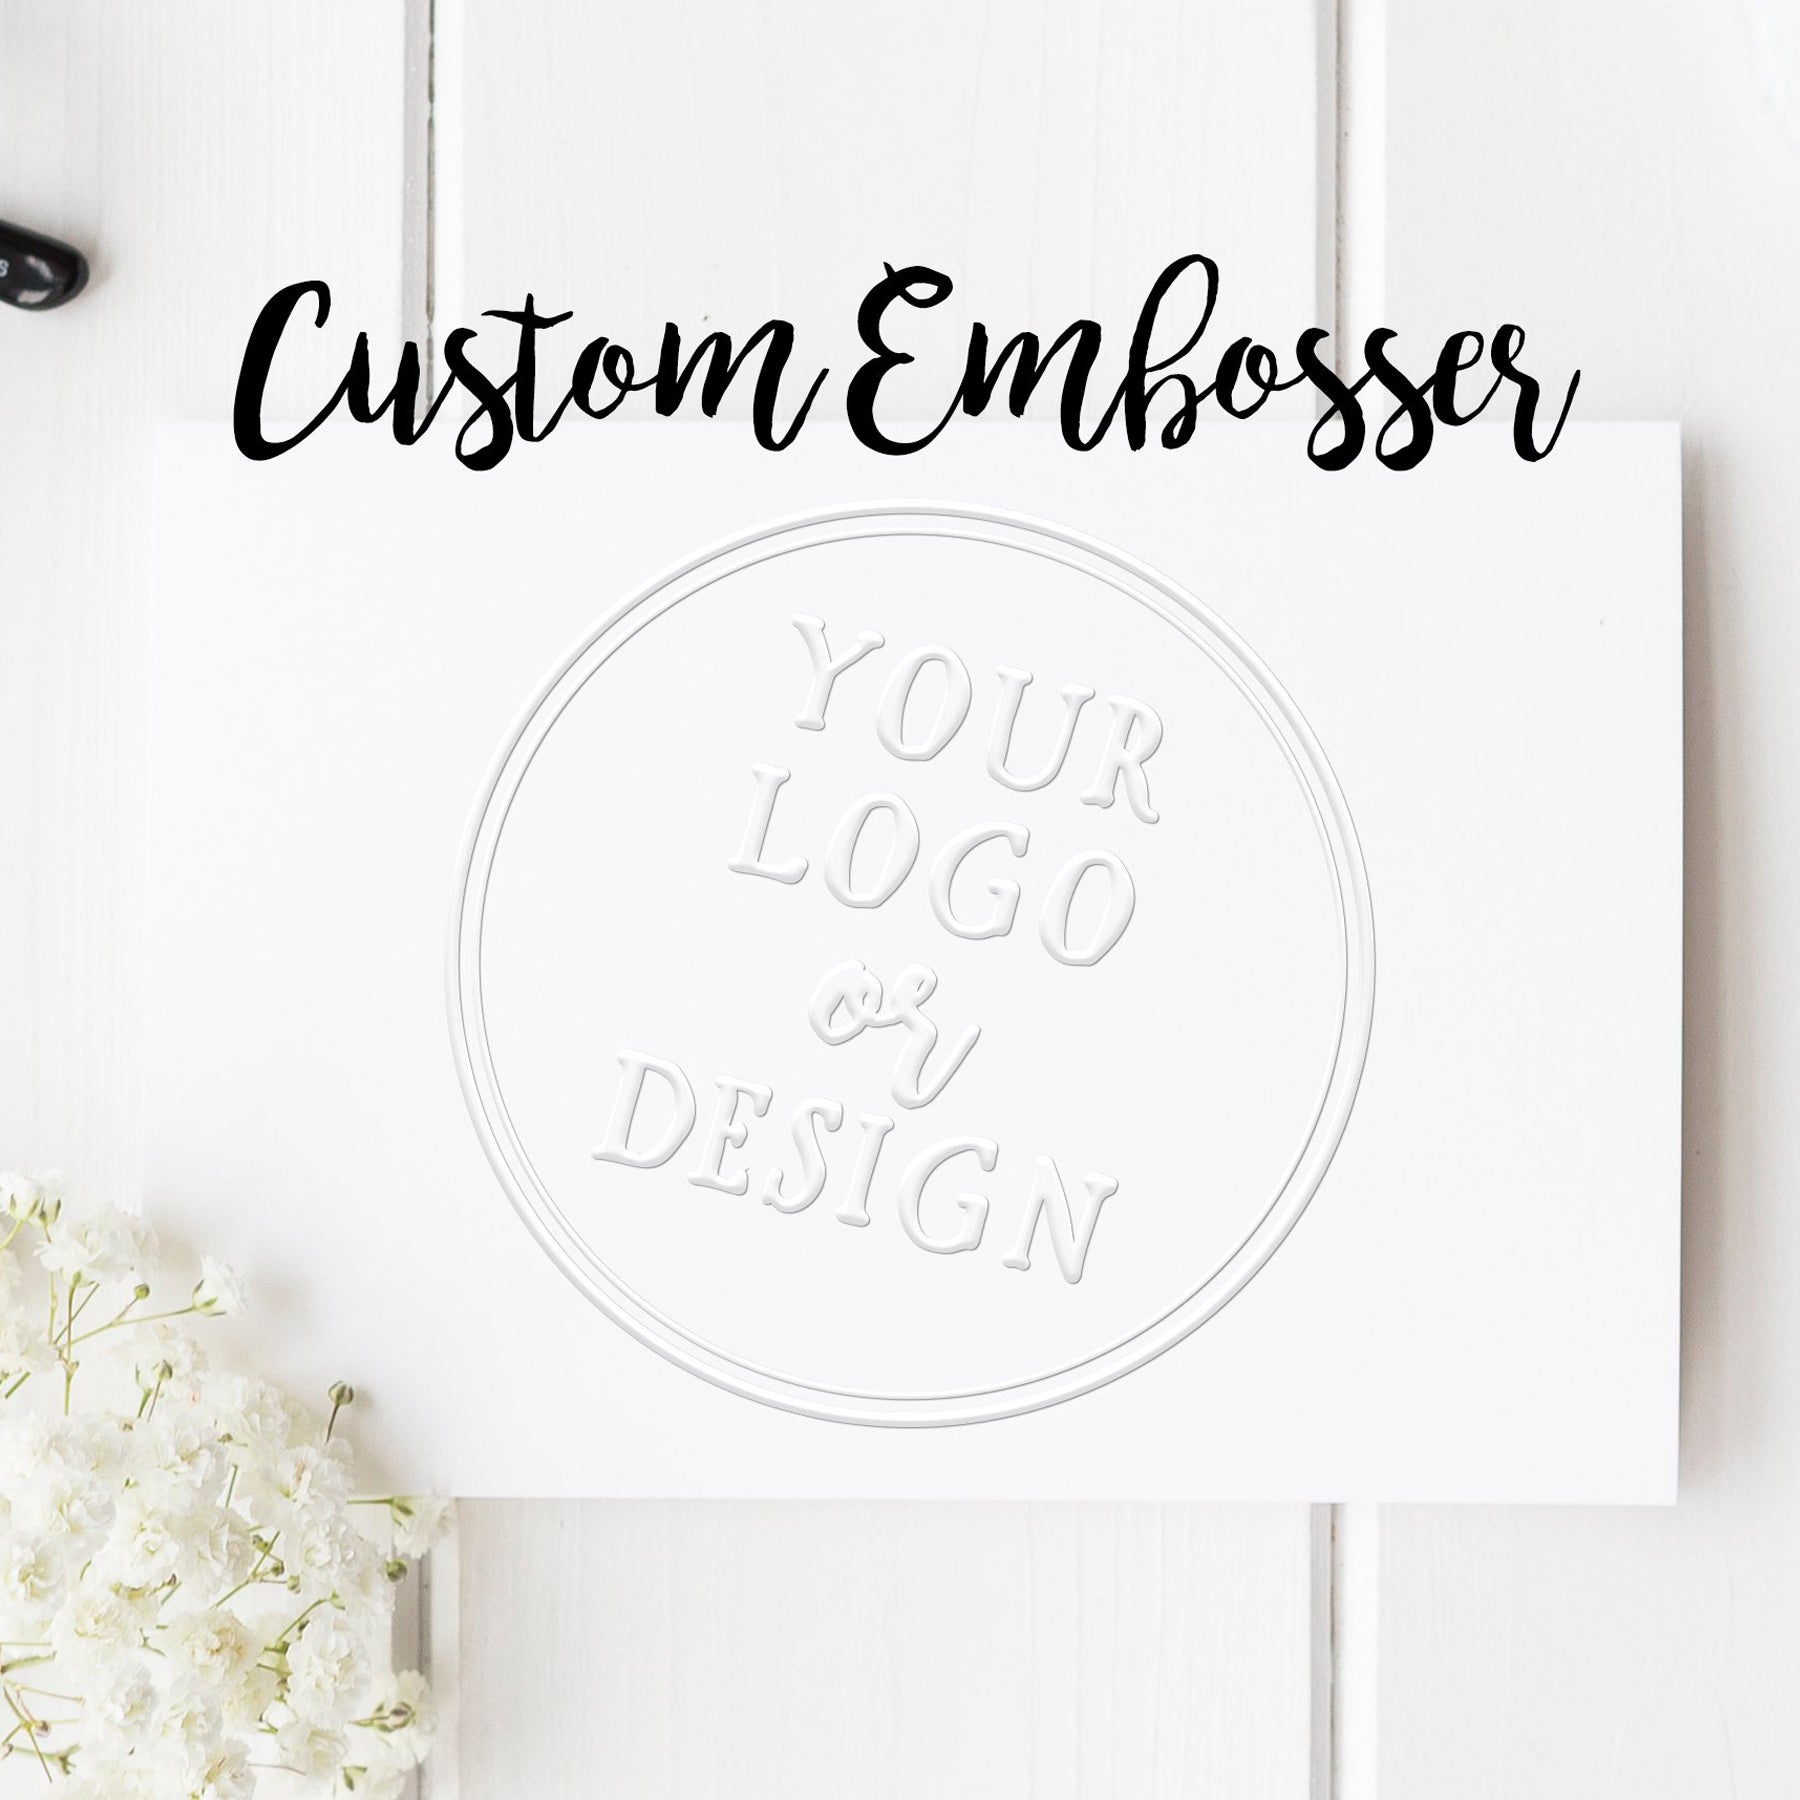 Personalized Embosser Design